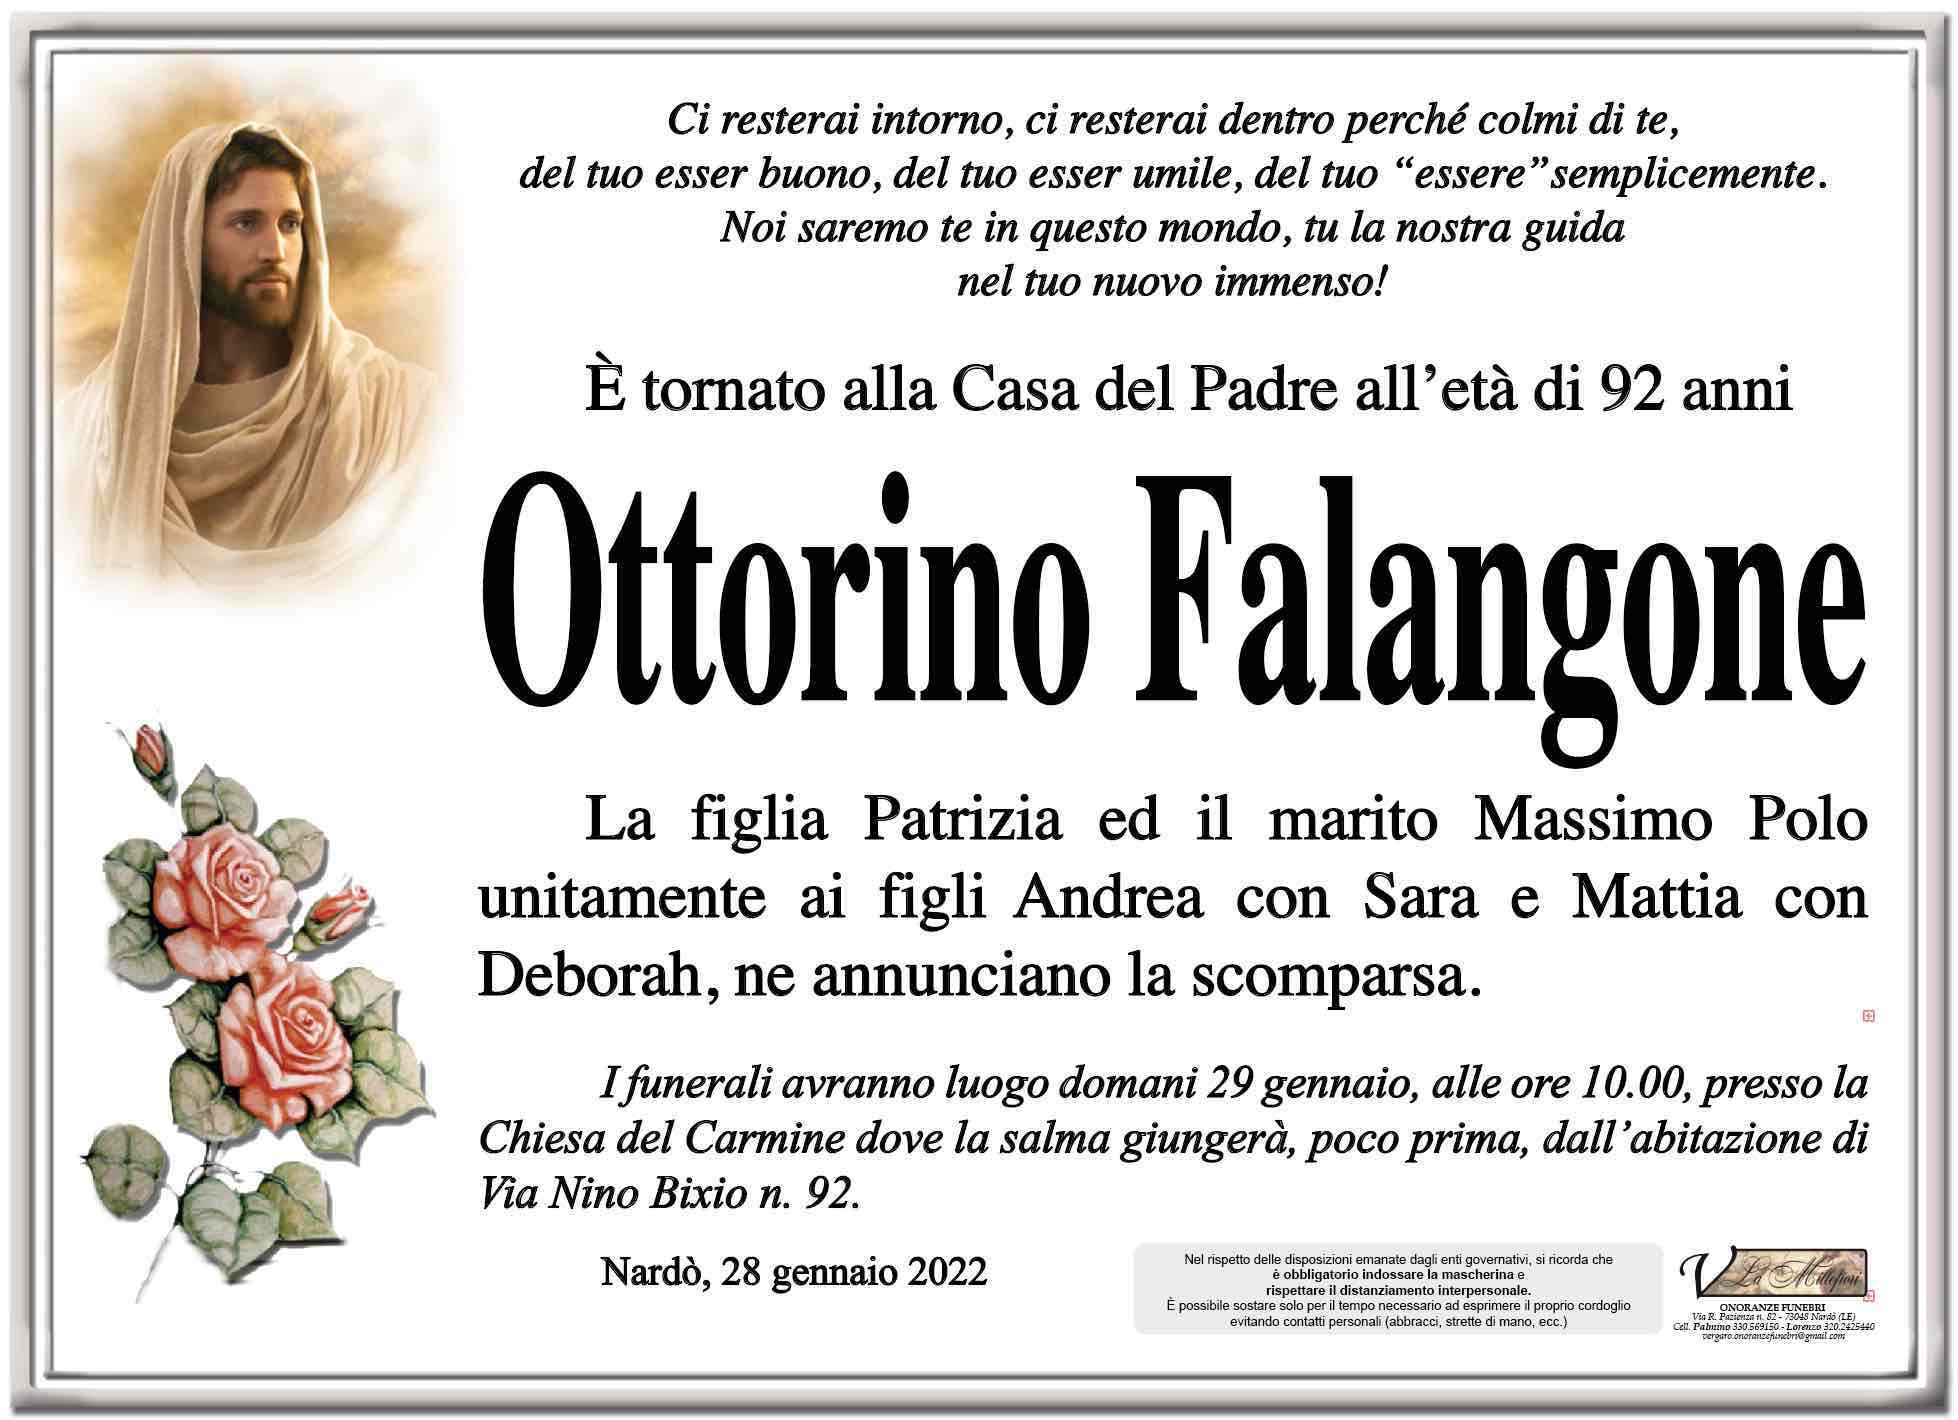 Ottorino Falangone